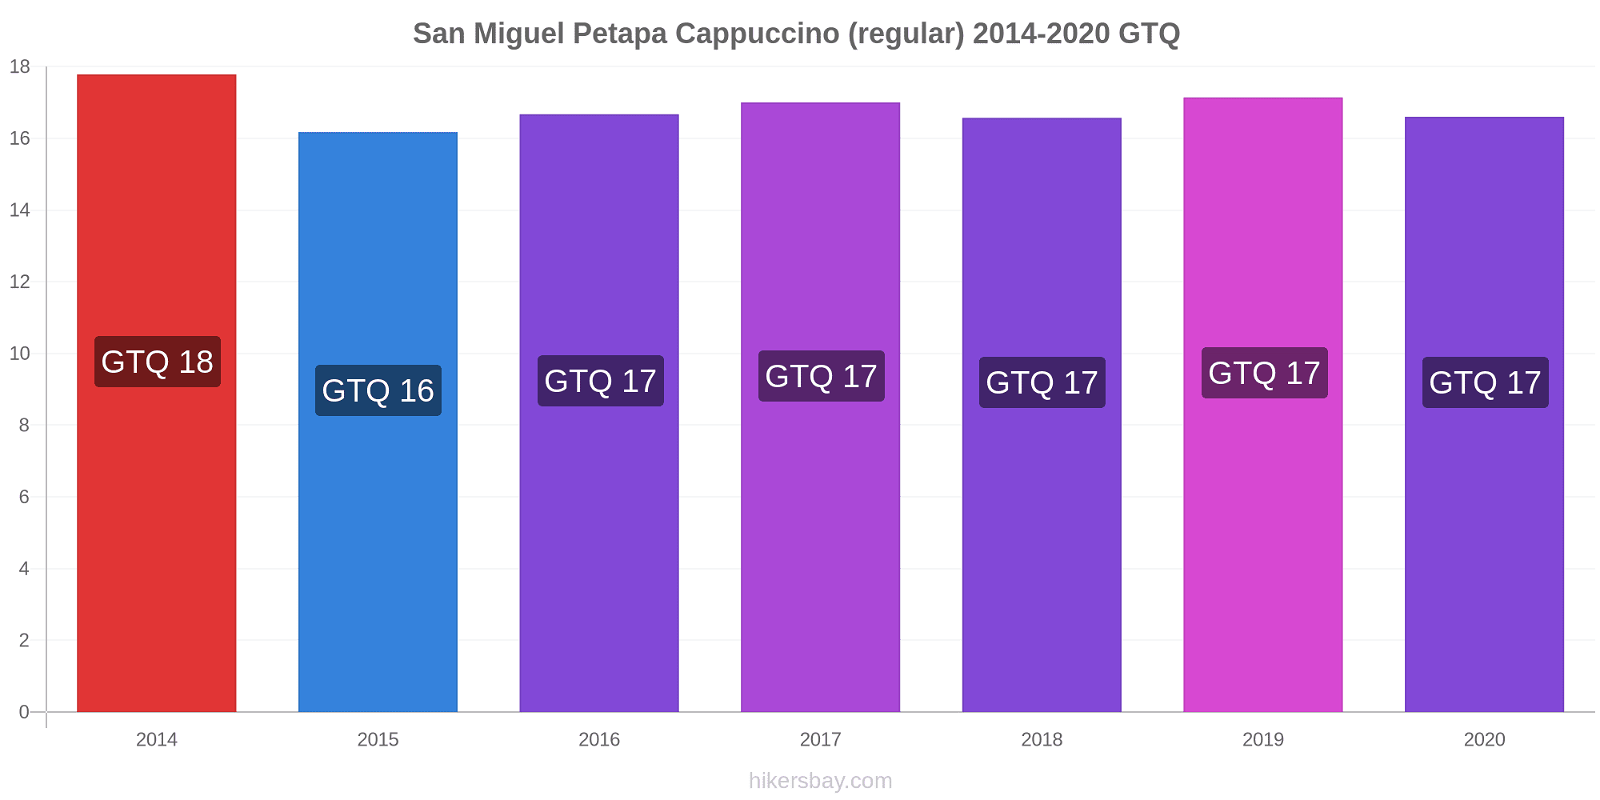 San Miguel Petapa price changes Cappuccino (regular) hikersbay.com